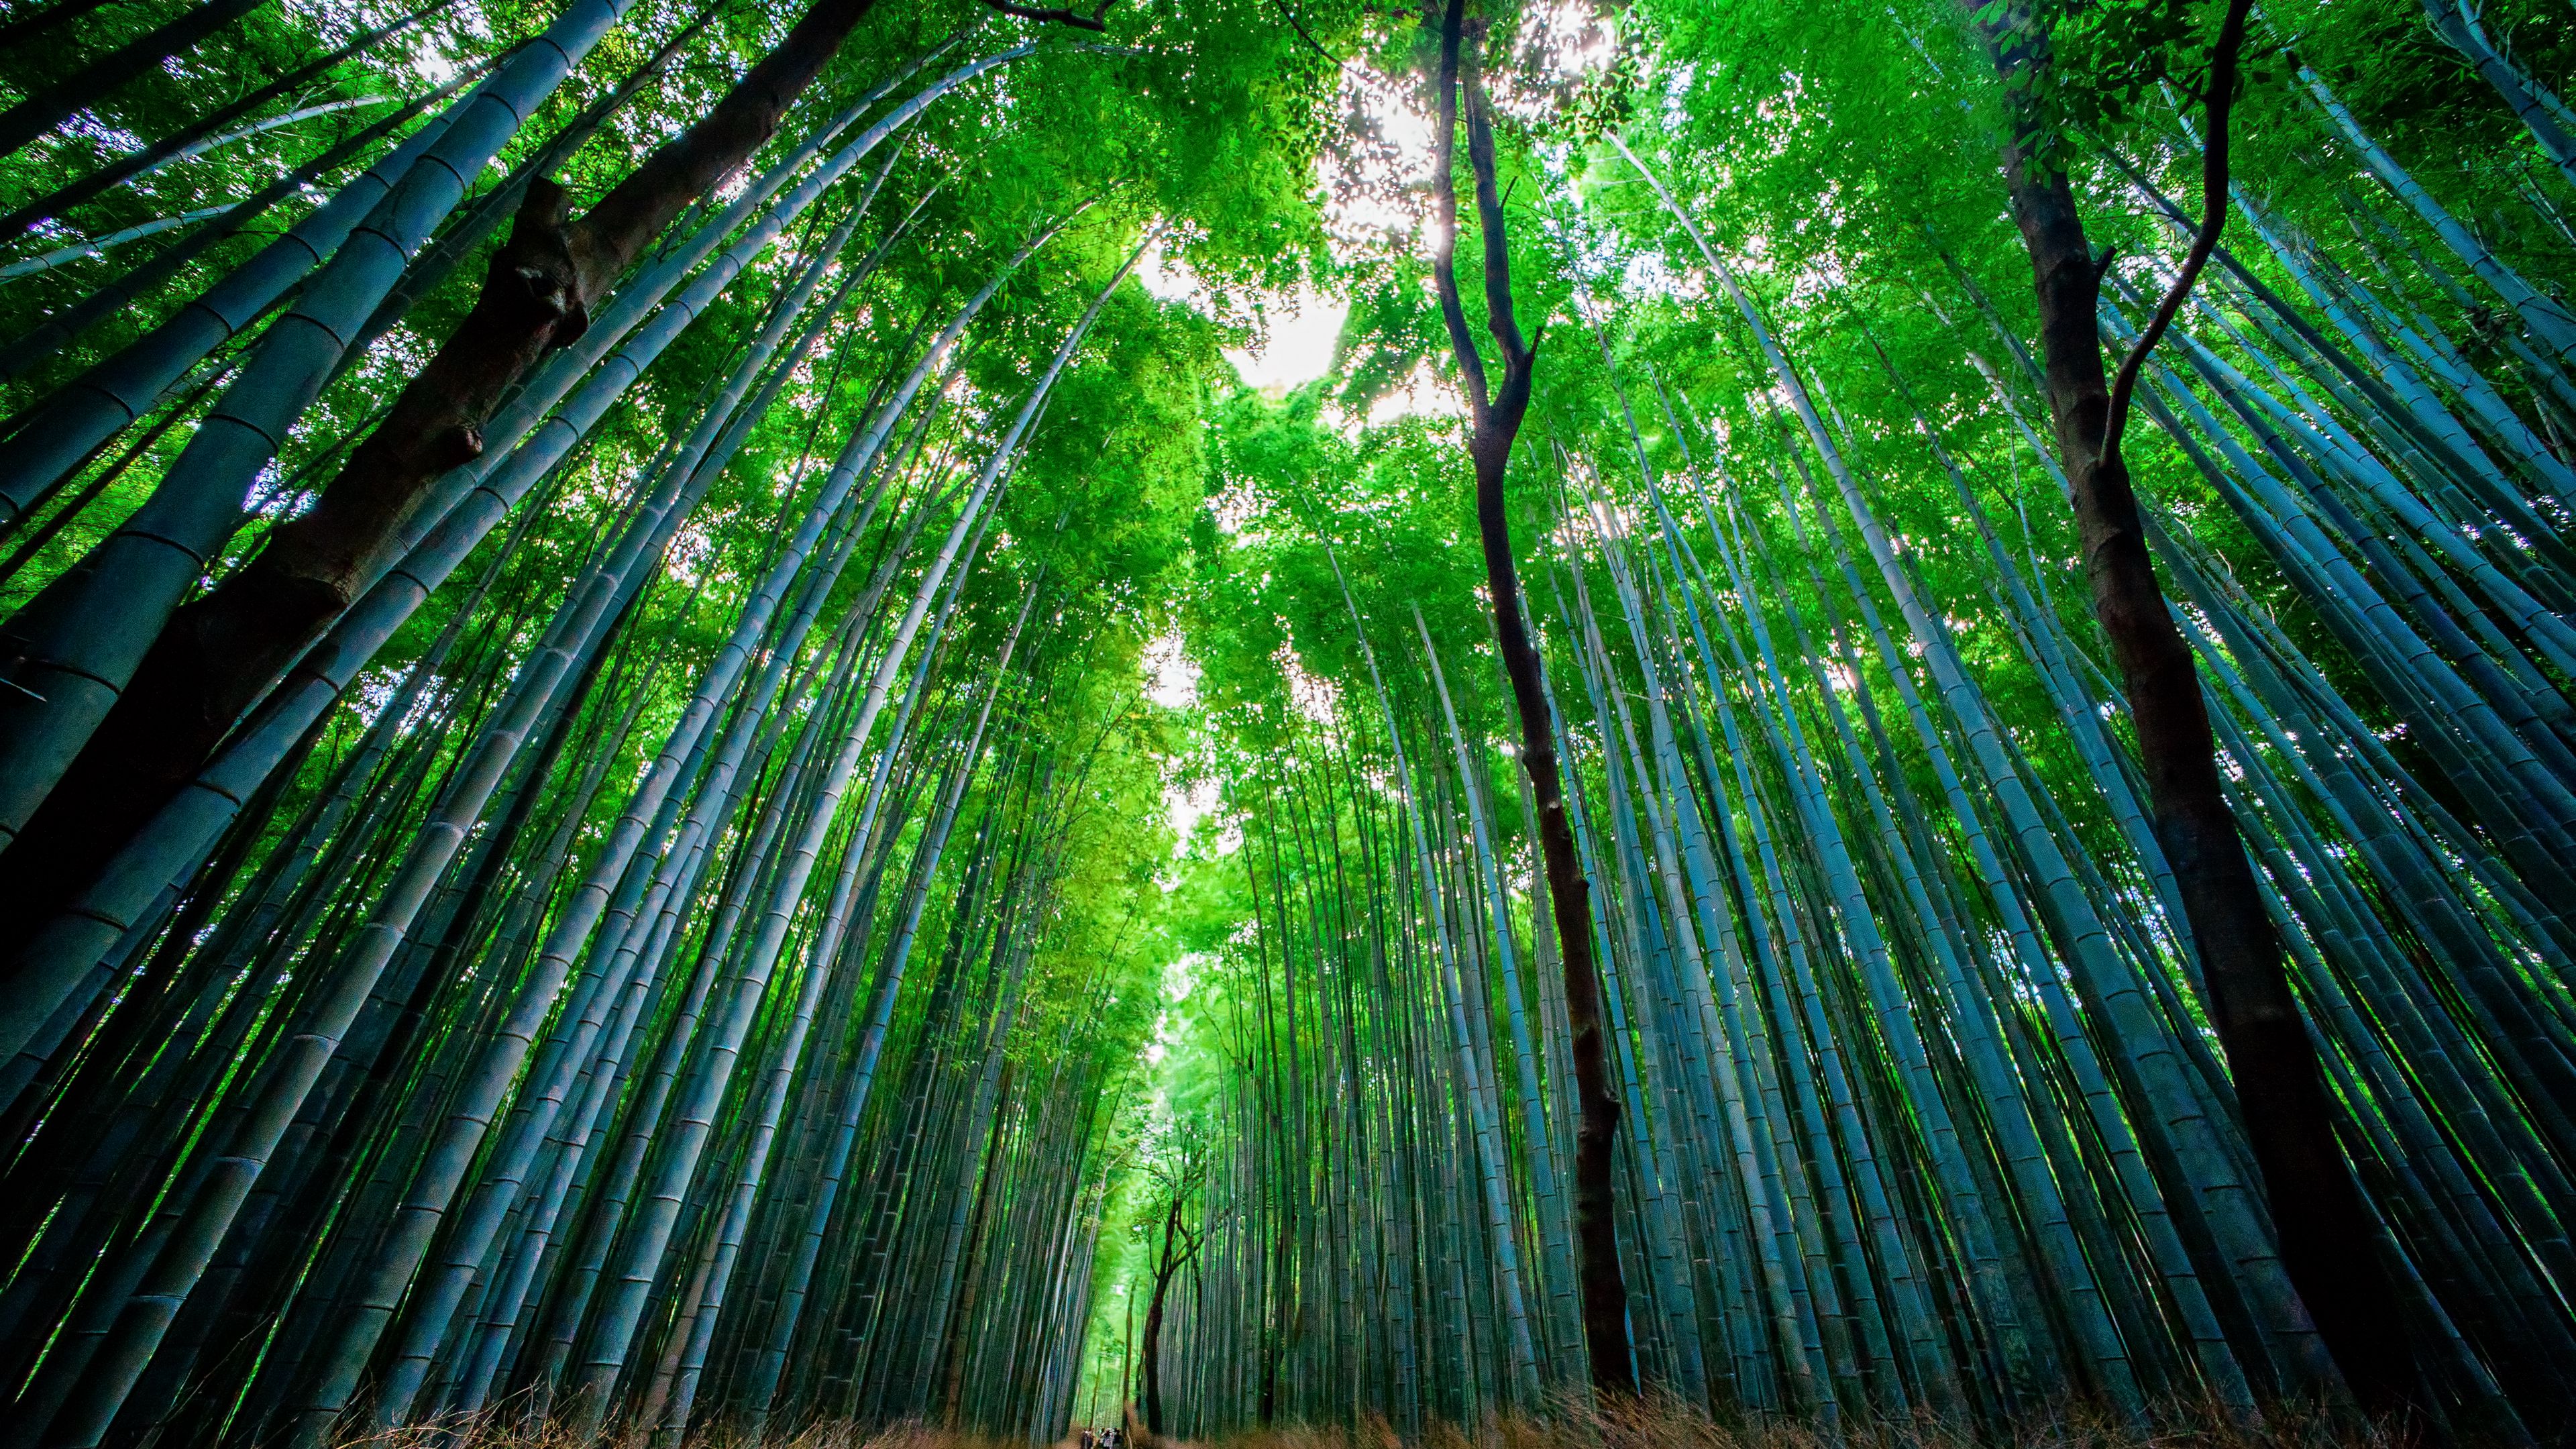 Bamboo 1080P, 2K, 4K, 5K HD wallpapers free download